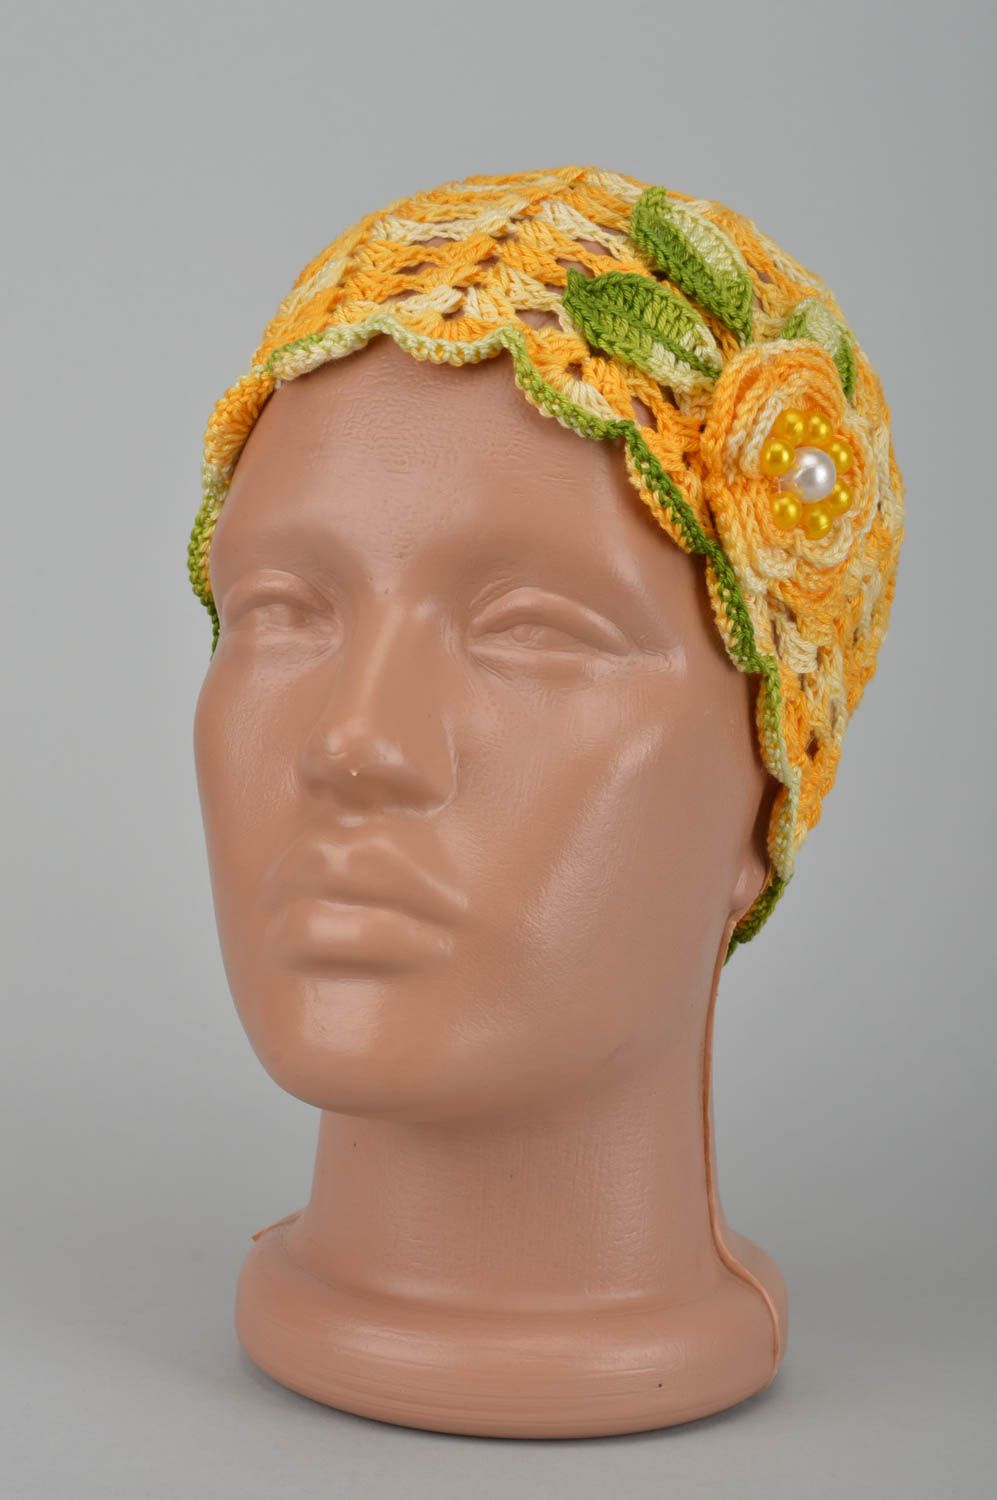 Spring knitted cap designer cap for girls unusual children headwear cute hat photo 1